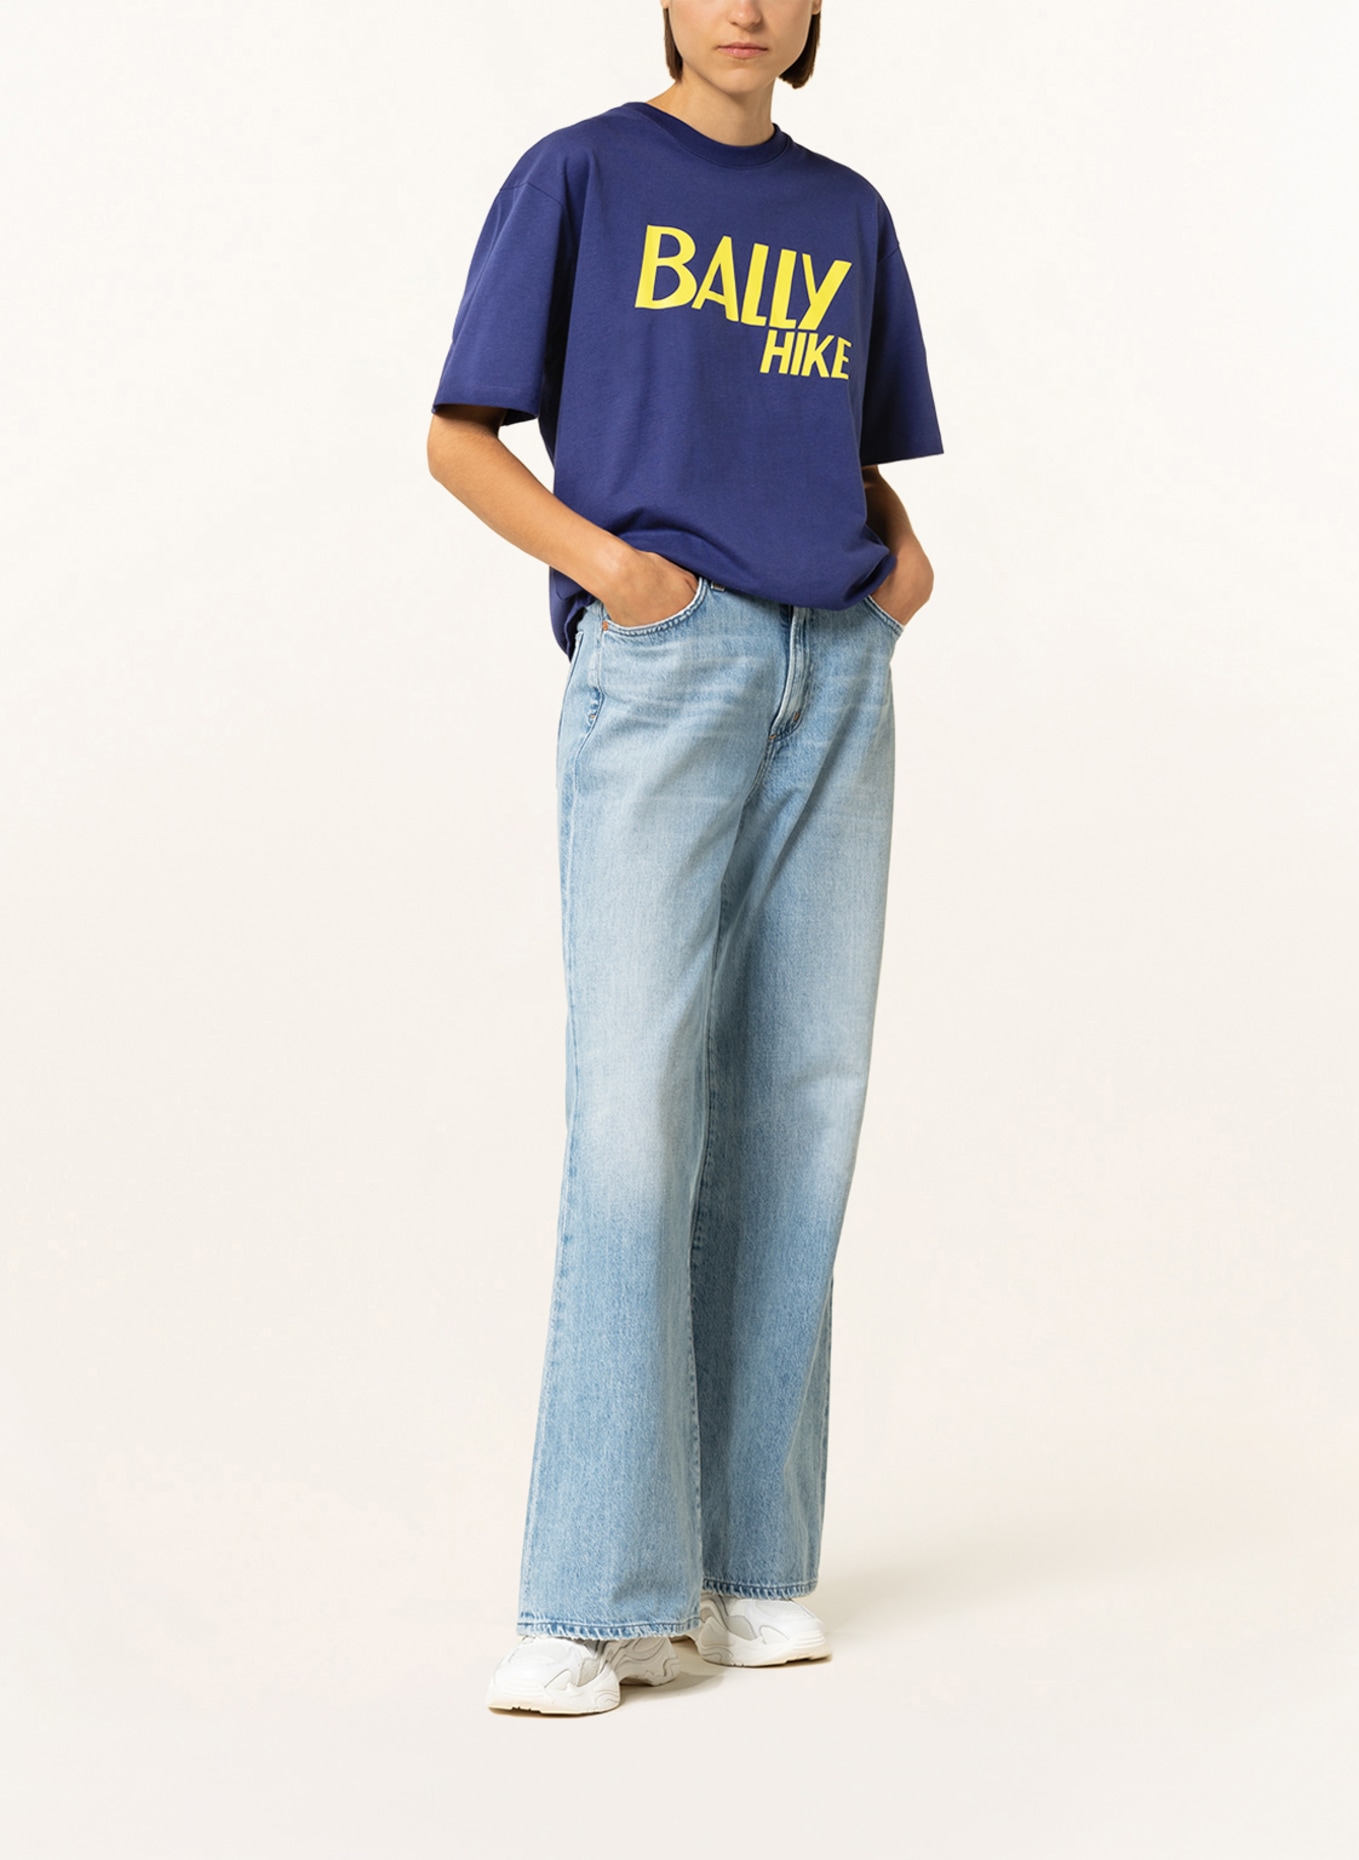 BALLY T-Shirt HIKE, Farbe: DUNKELBLAU (Bild 2)